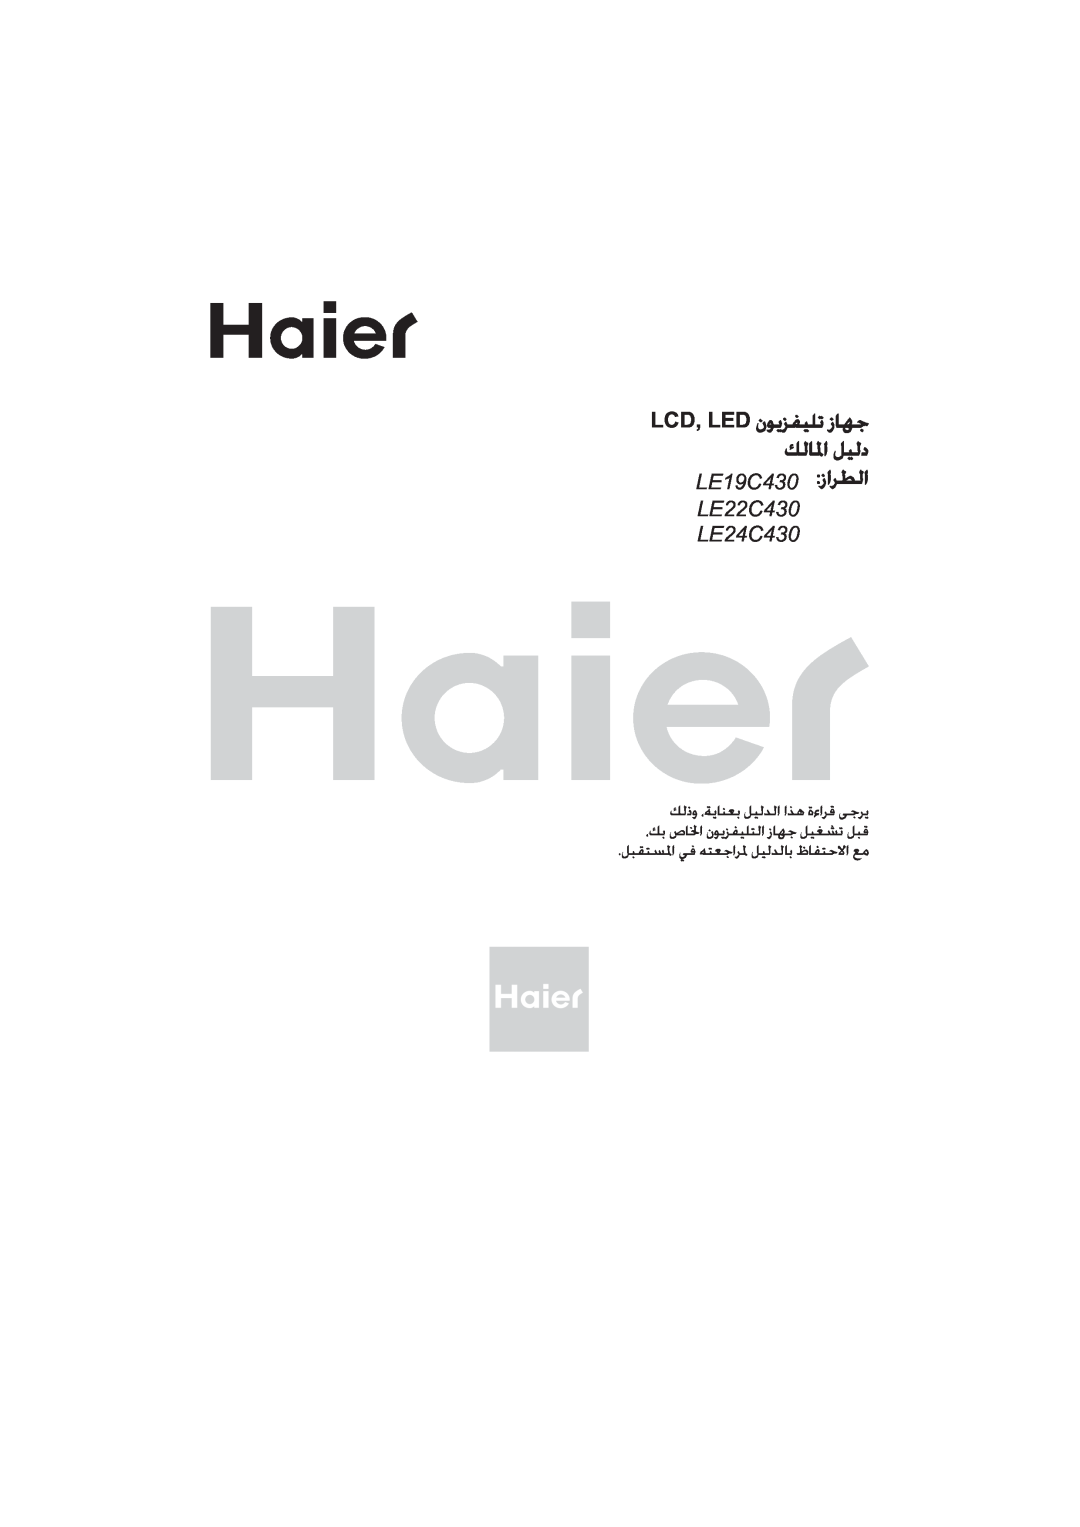 Haier owner manual Lcd, Led, LE19C430 LE22C430 LE24C430 